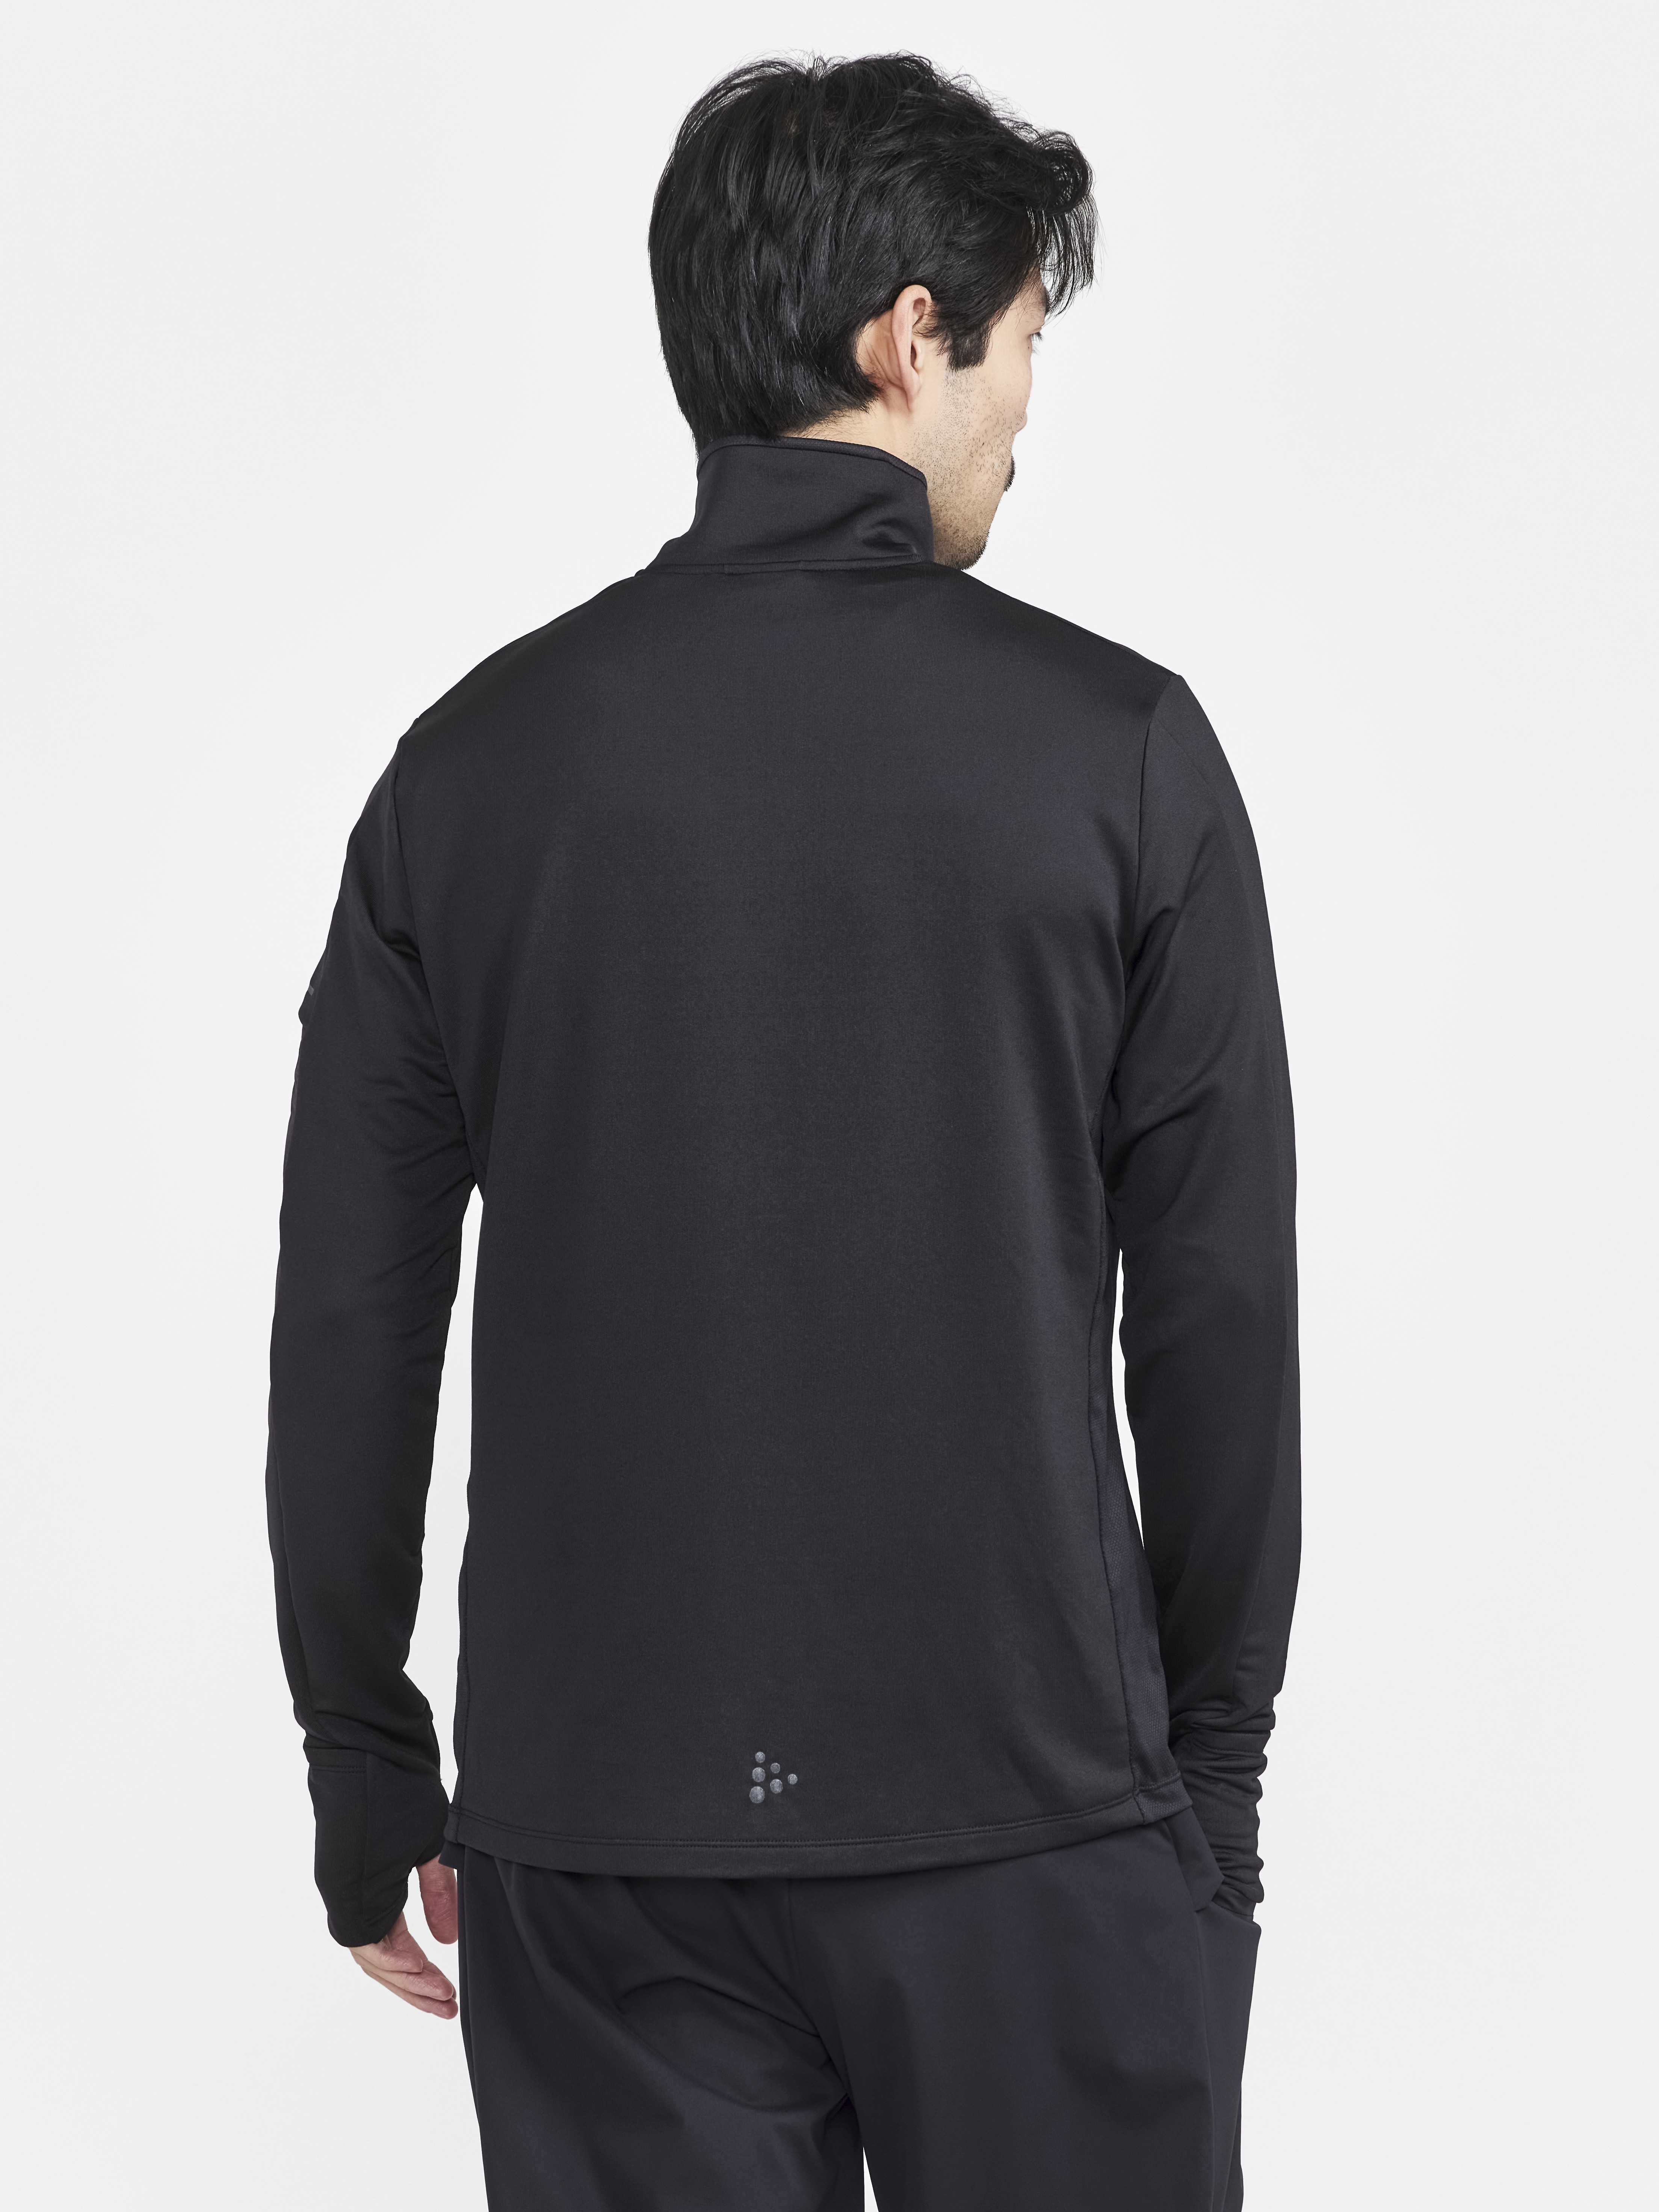 ADV SubZ LS M - Black | Craft Sportswear